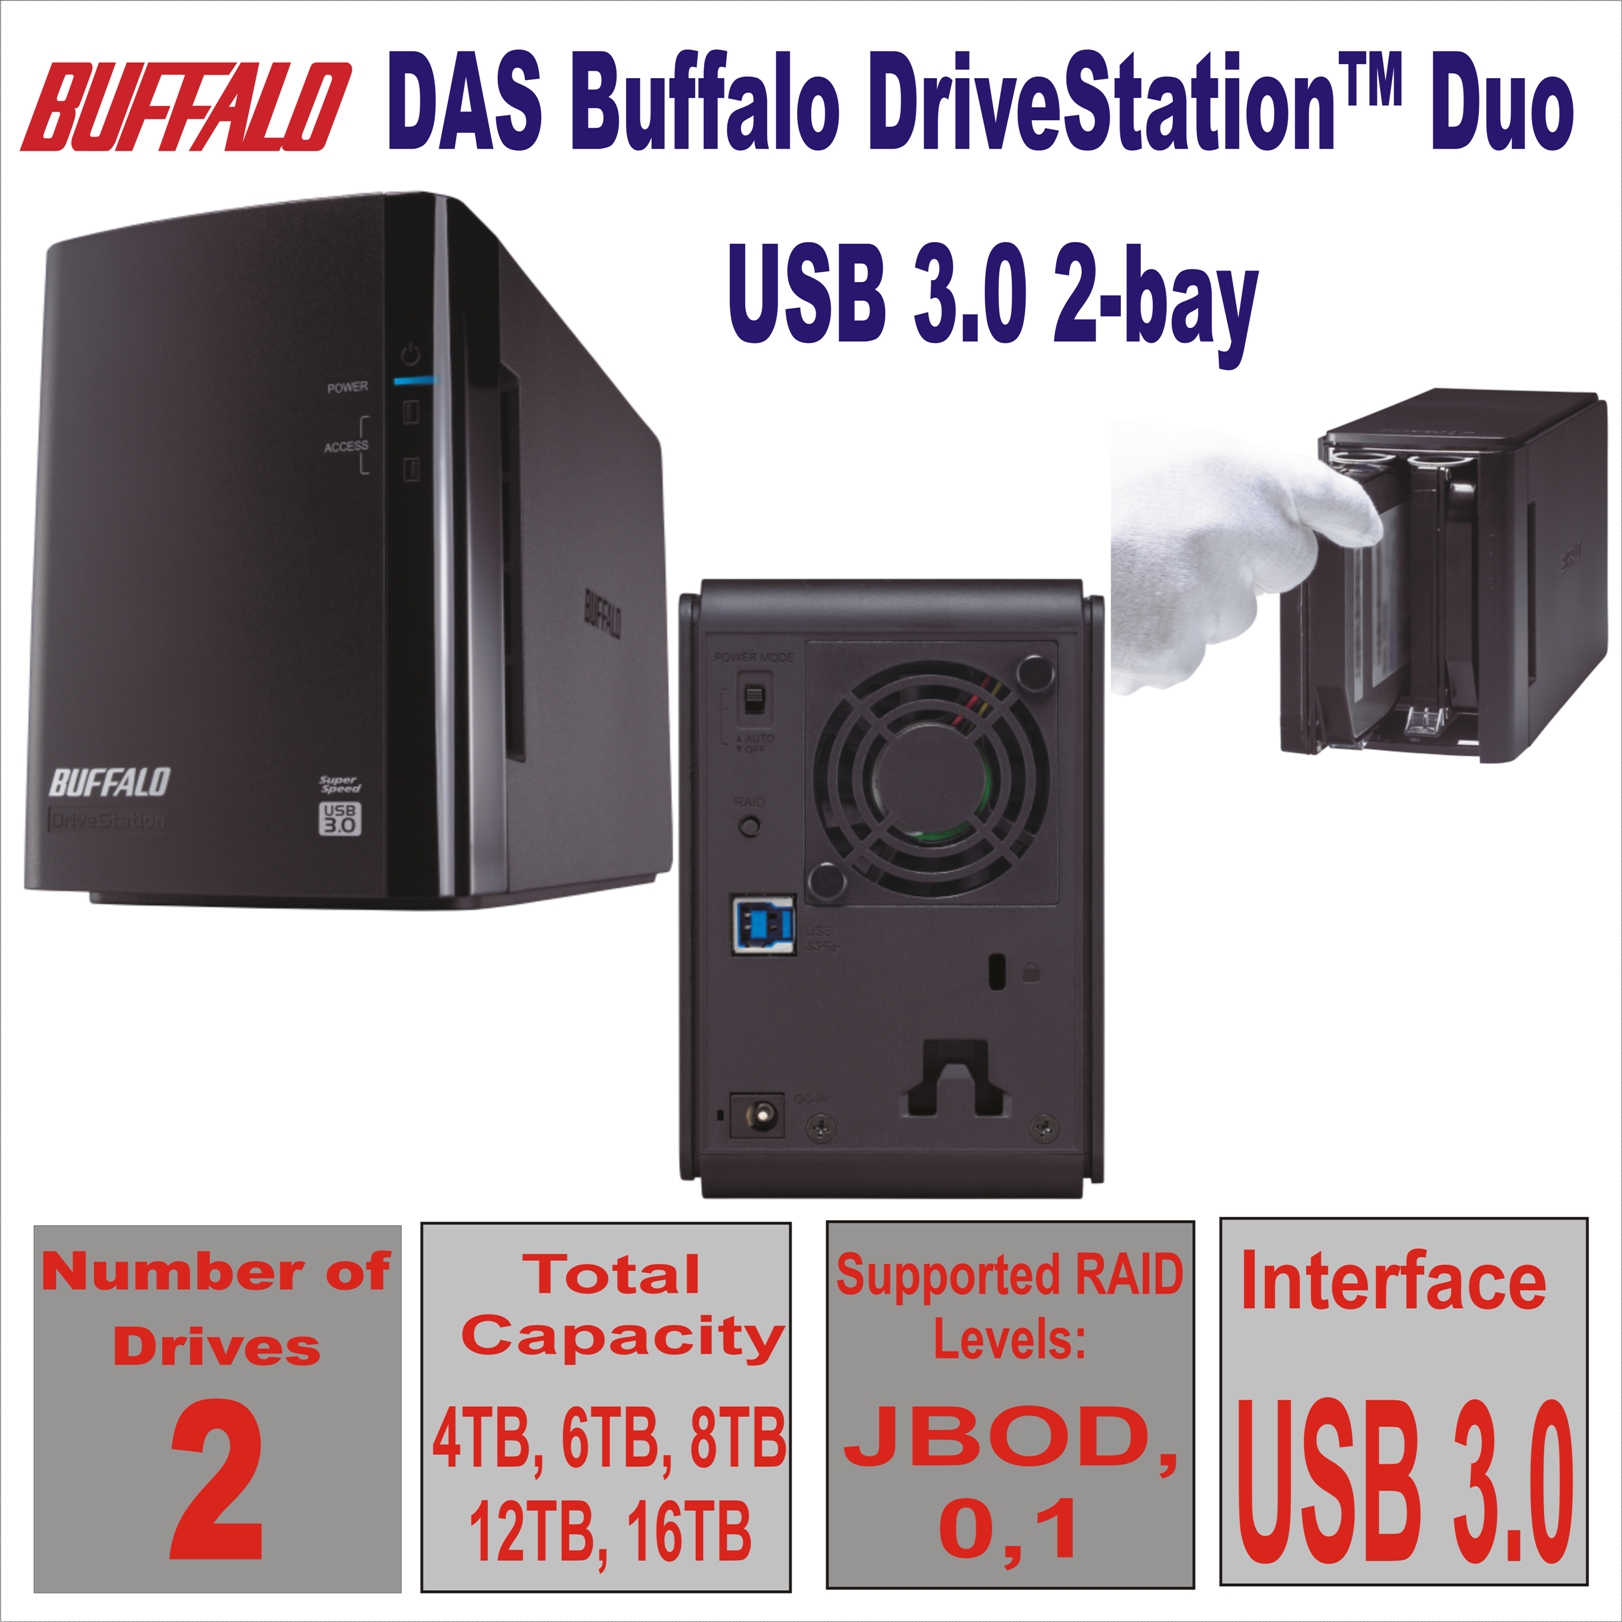 DAS Buffalo DriveStation™ Duo USB 3.0 2-bay